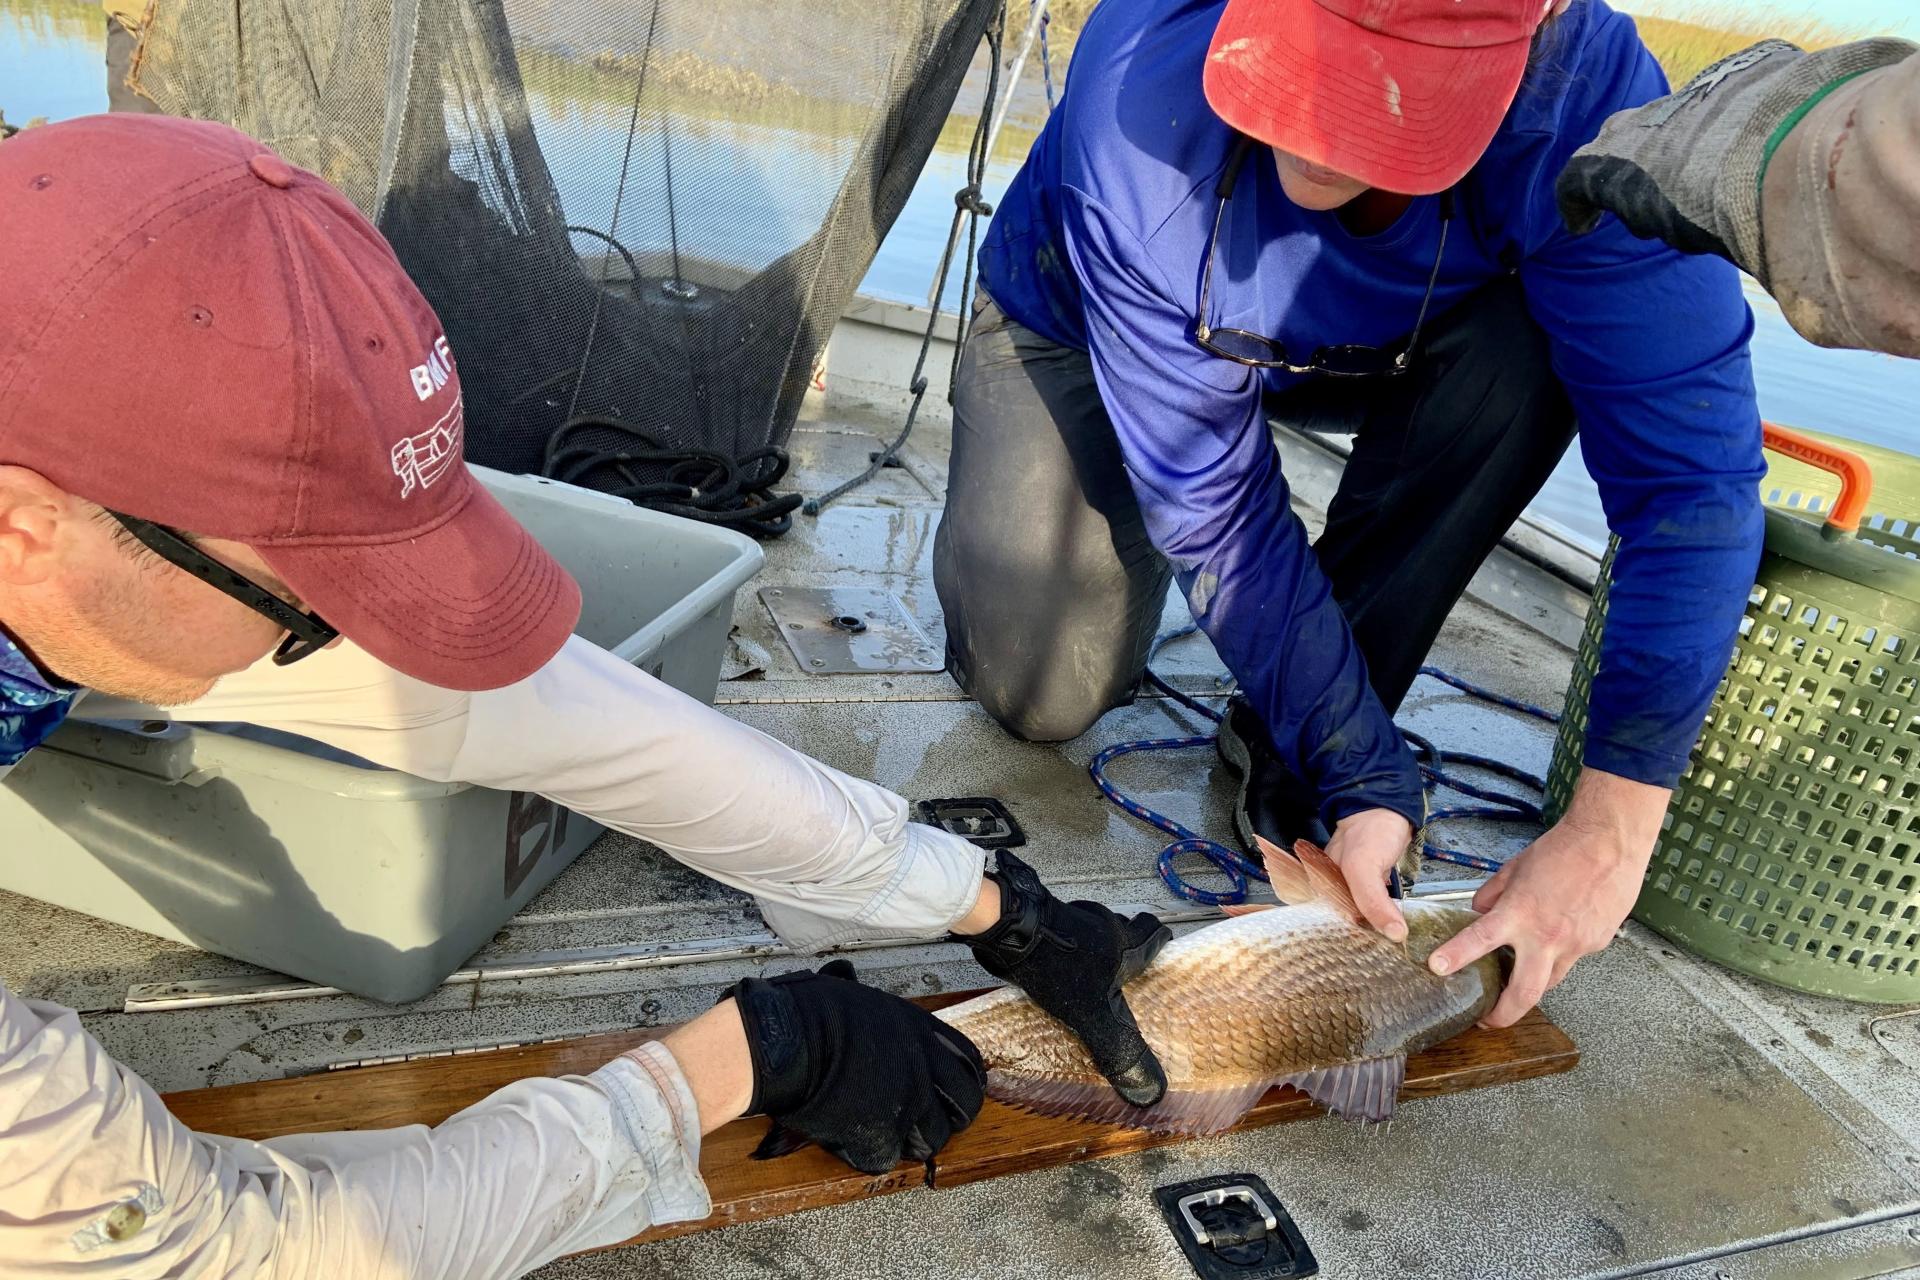 Team members measuring a red drum fish